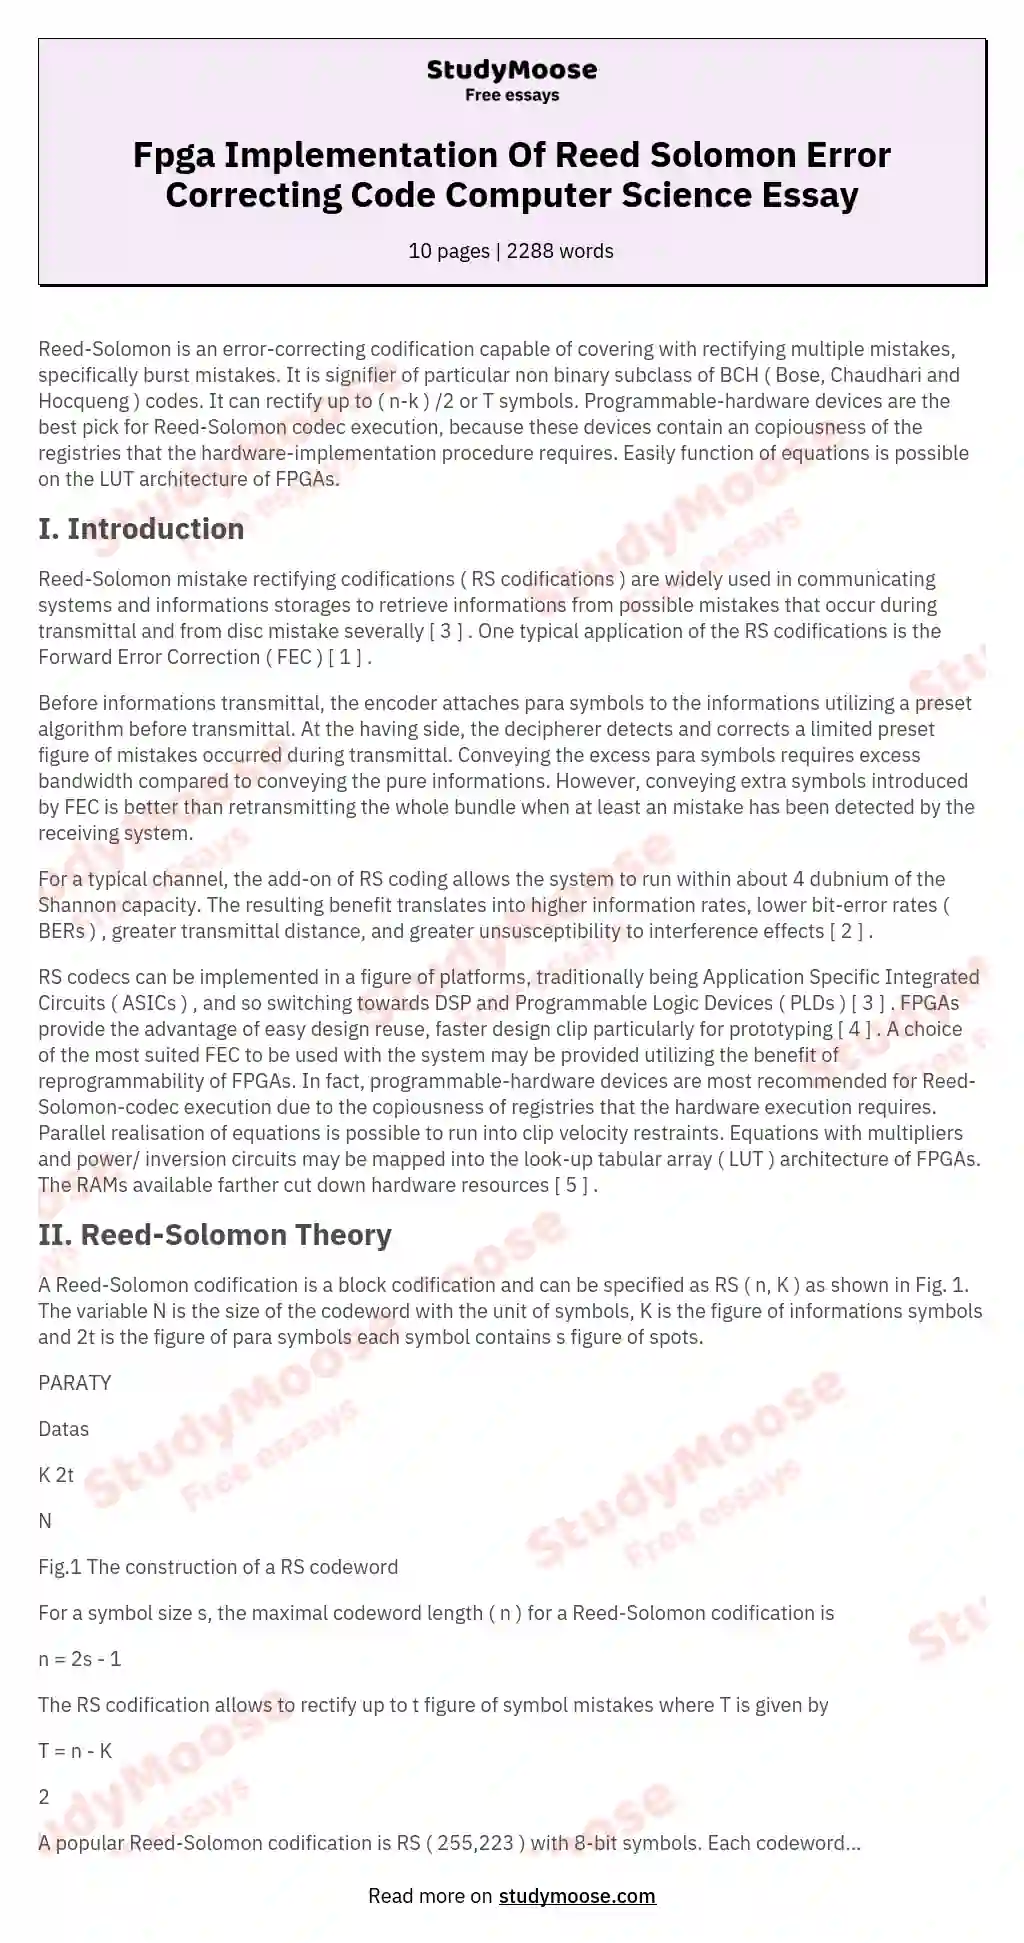 Fpga Implementation Of Reed Solomon Error Correcting Code Computer Science Essay